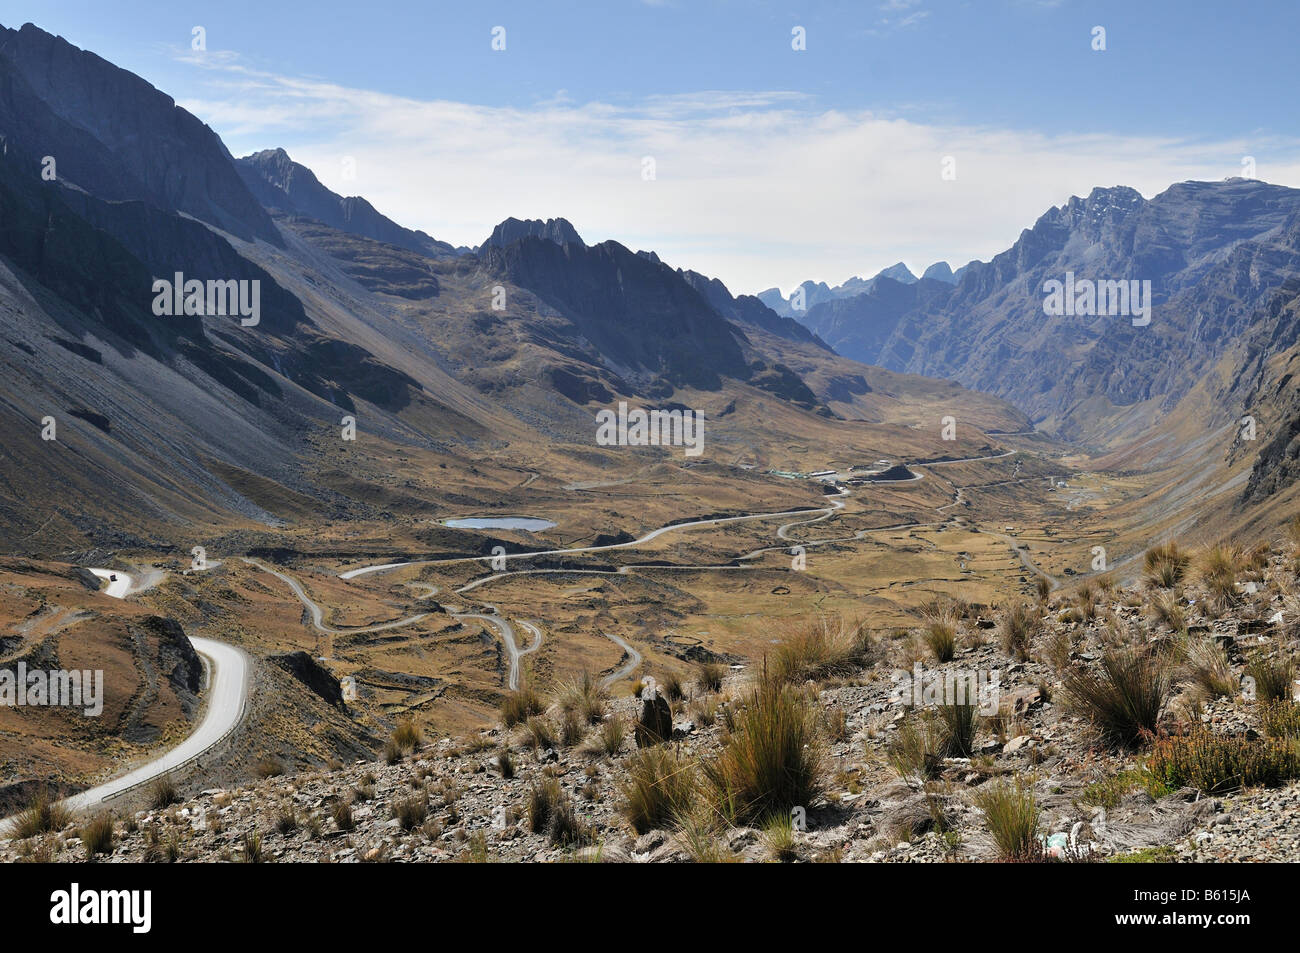 Landscape in the Andes with Deathroad, Altiplano, La Paz, Bolivia, South America Stock Photo